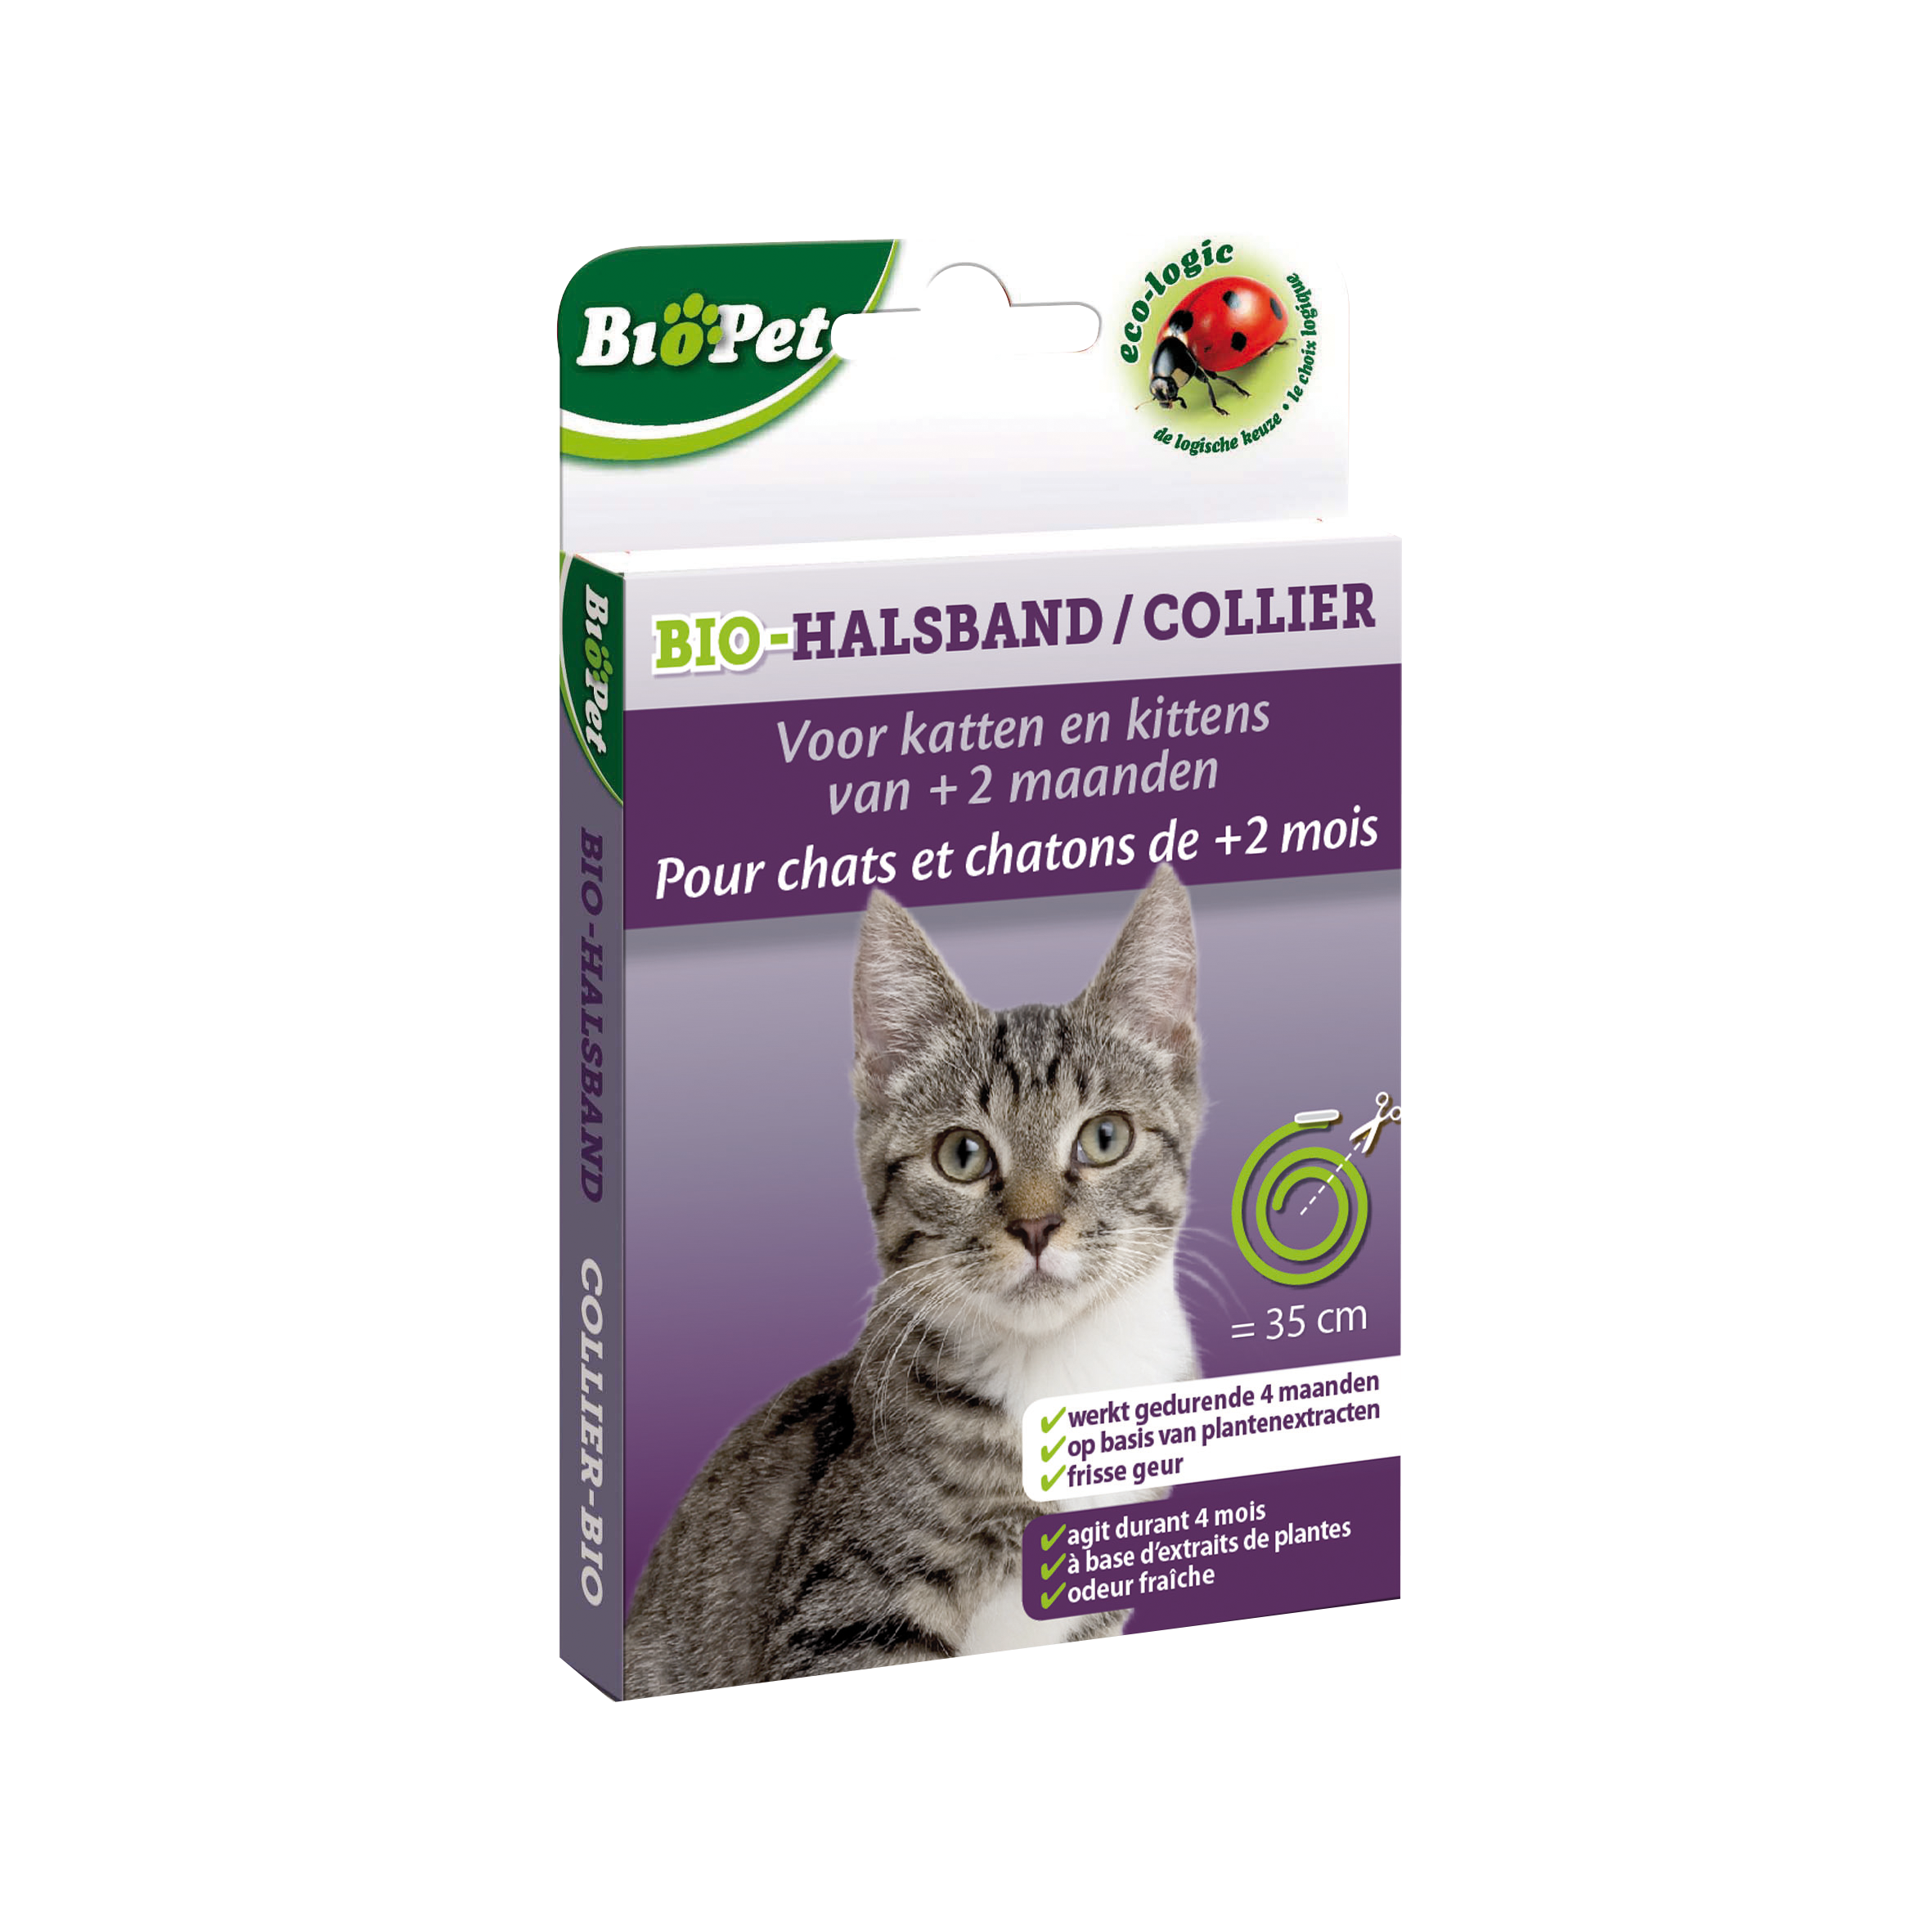 Biopet bio-halsband anti-parasite katten image